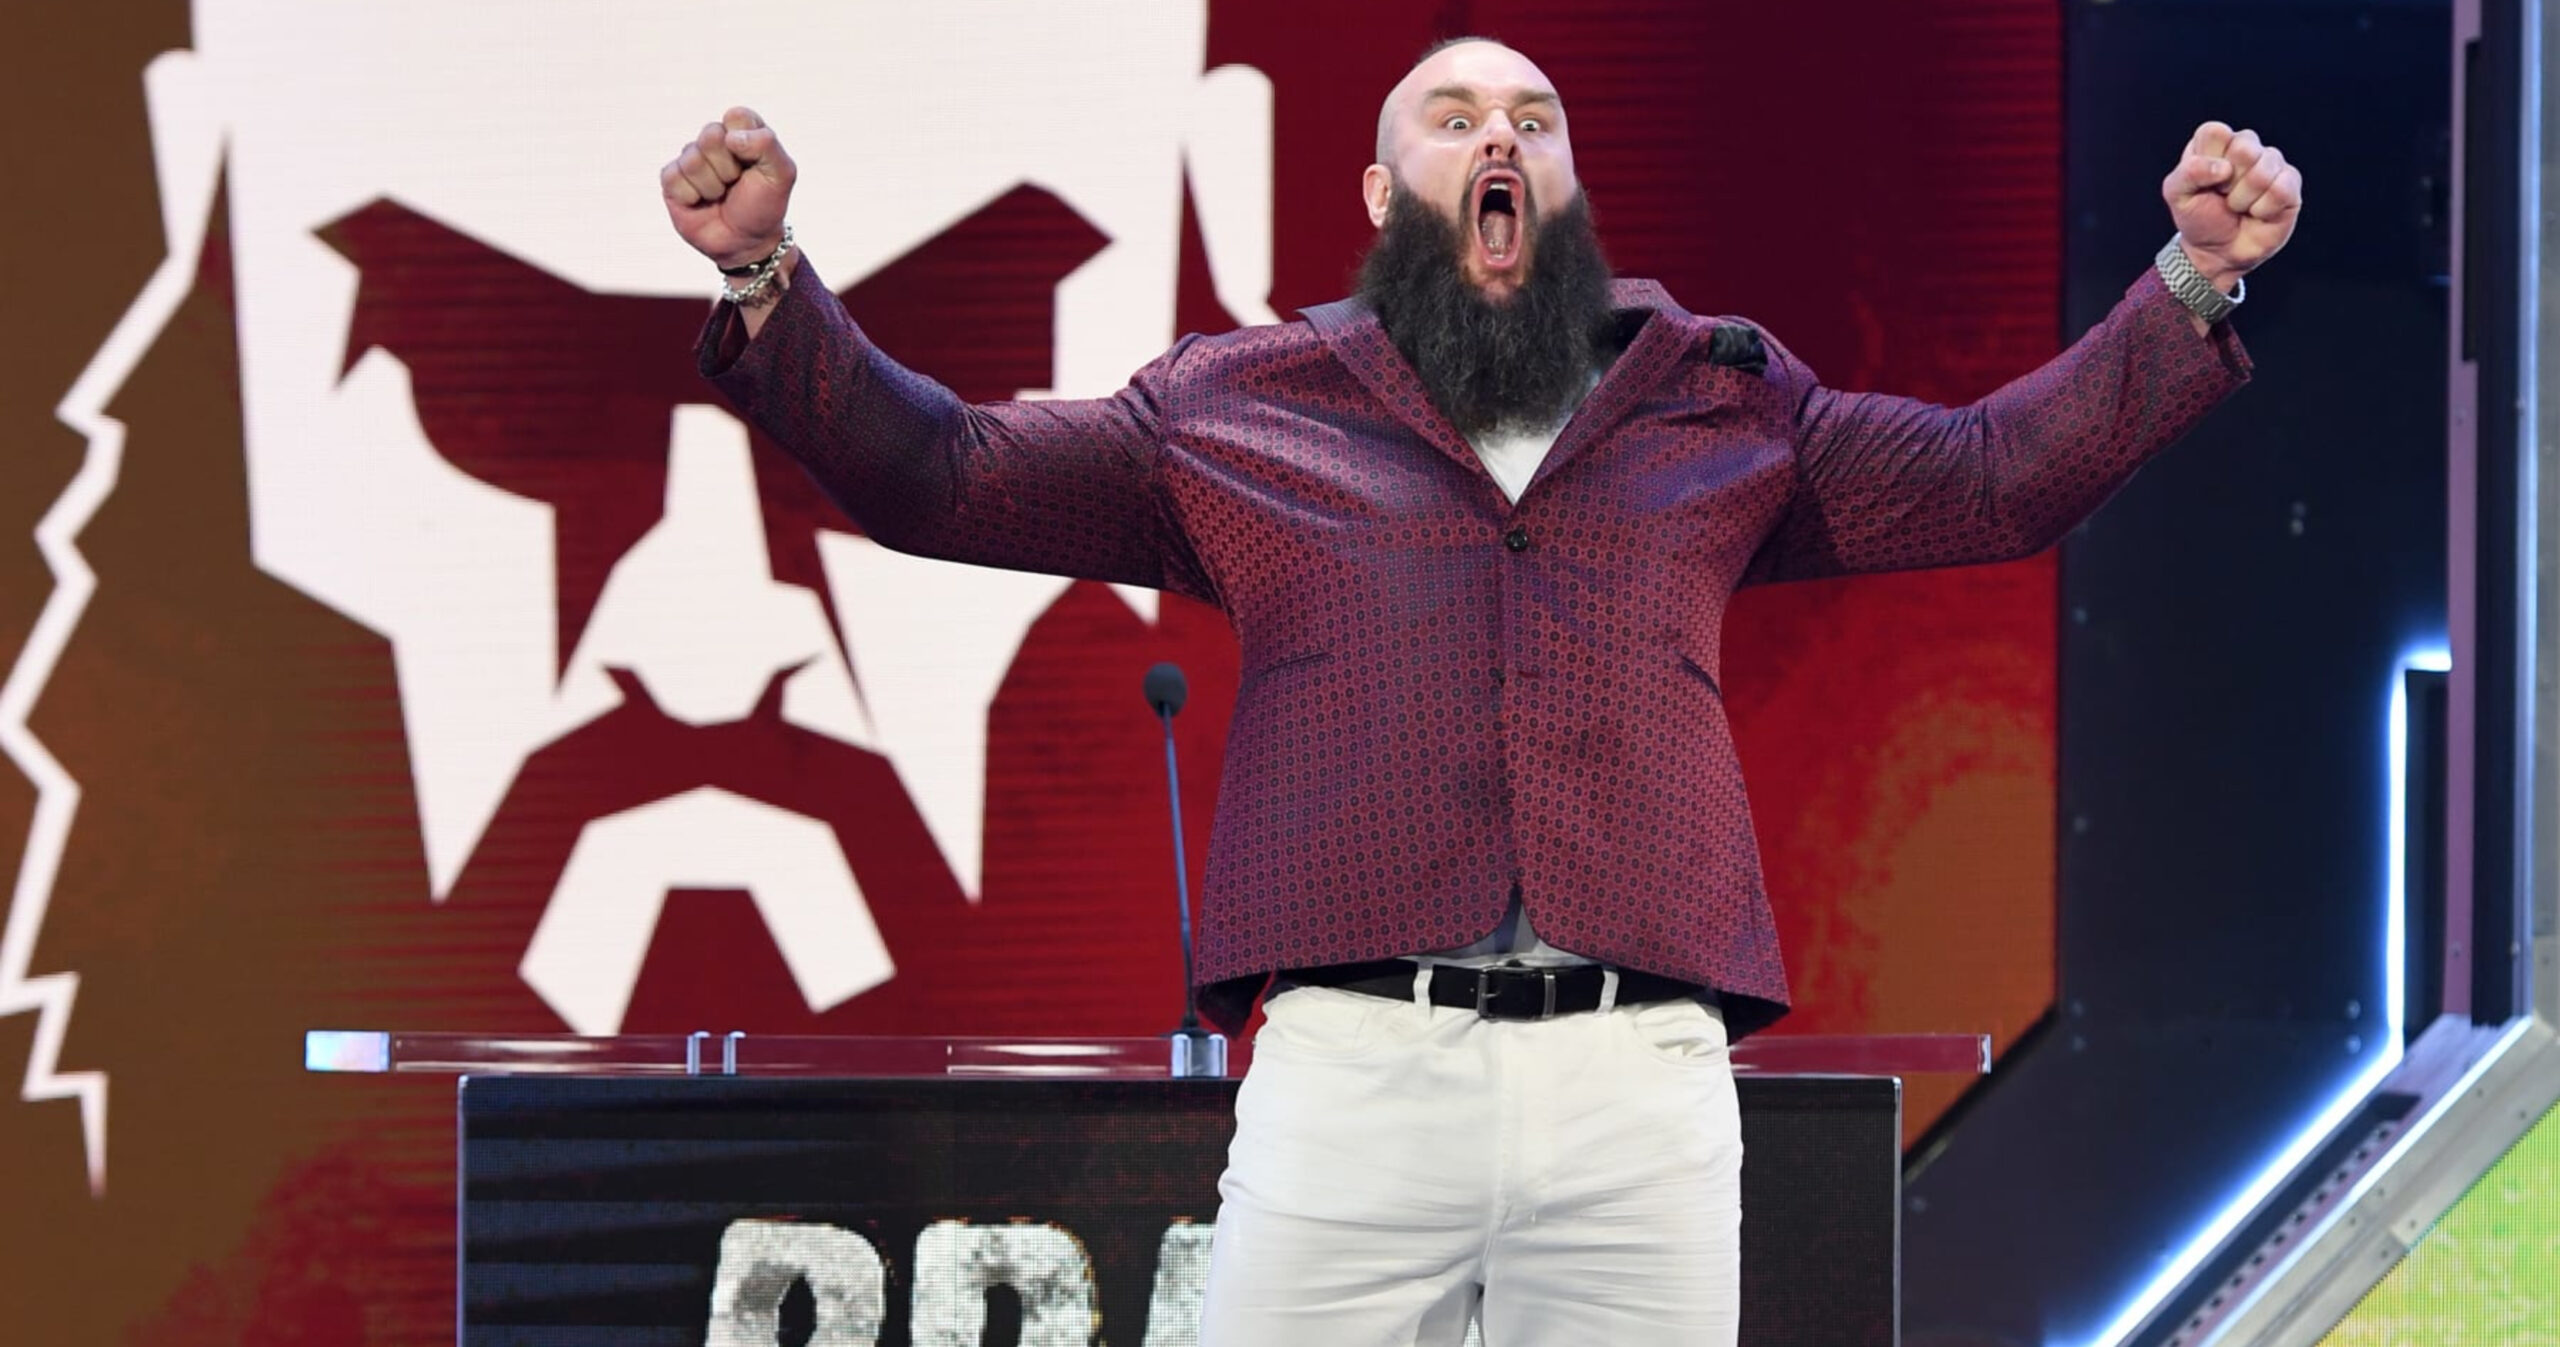 Braun Strowman Returns to WWE, Destroys 4 Tag Teams in No. 1 Contender Match